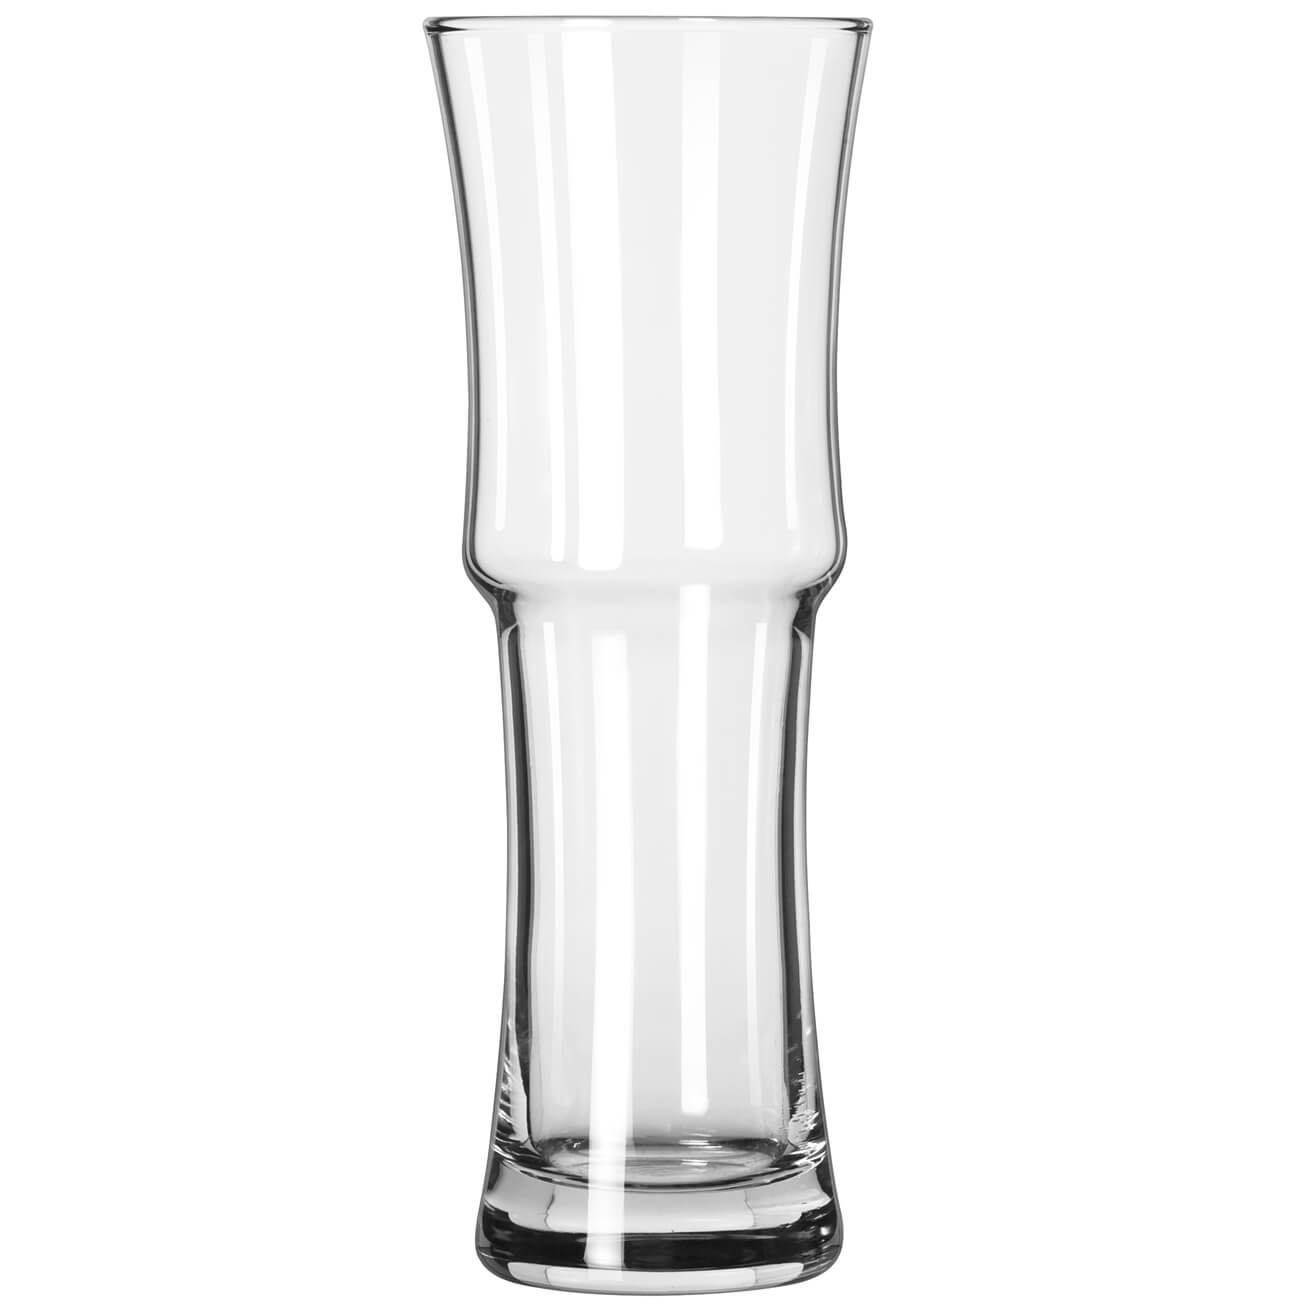 Cocktail glass Napoli Grande, Onis - 470ml